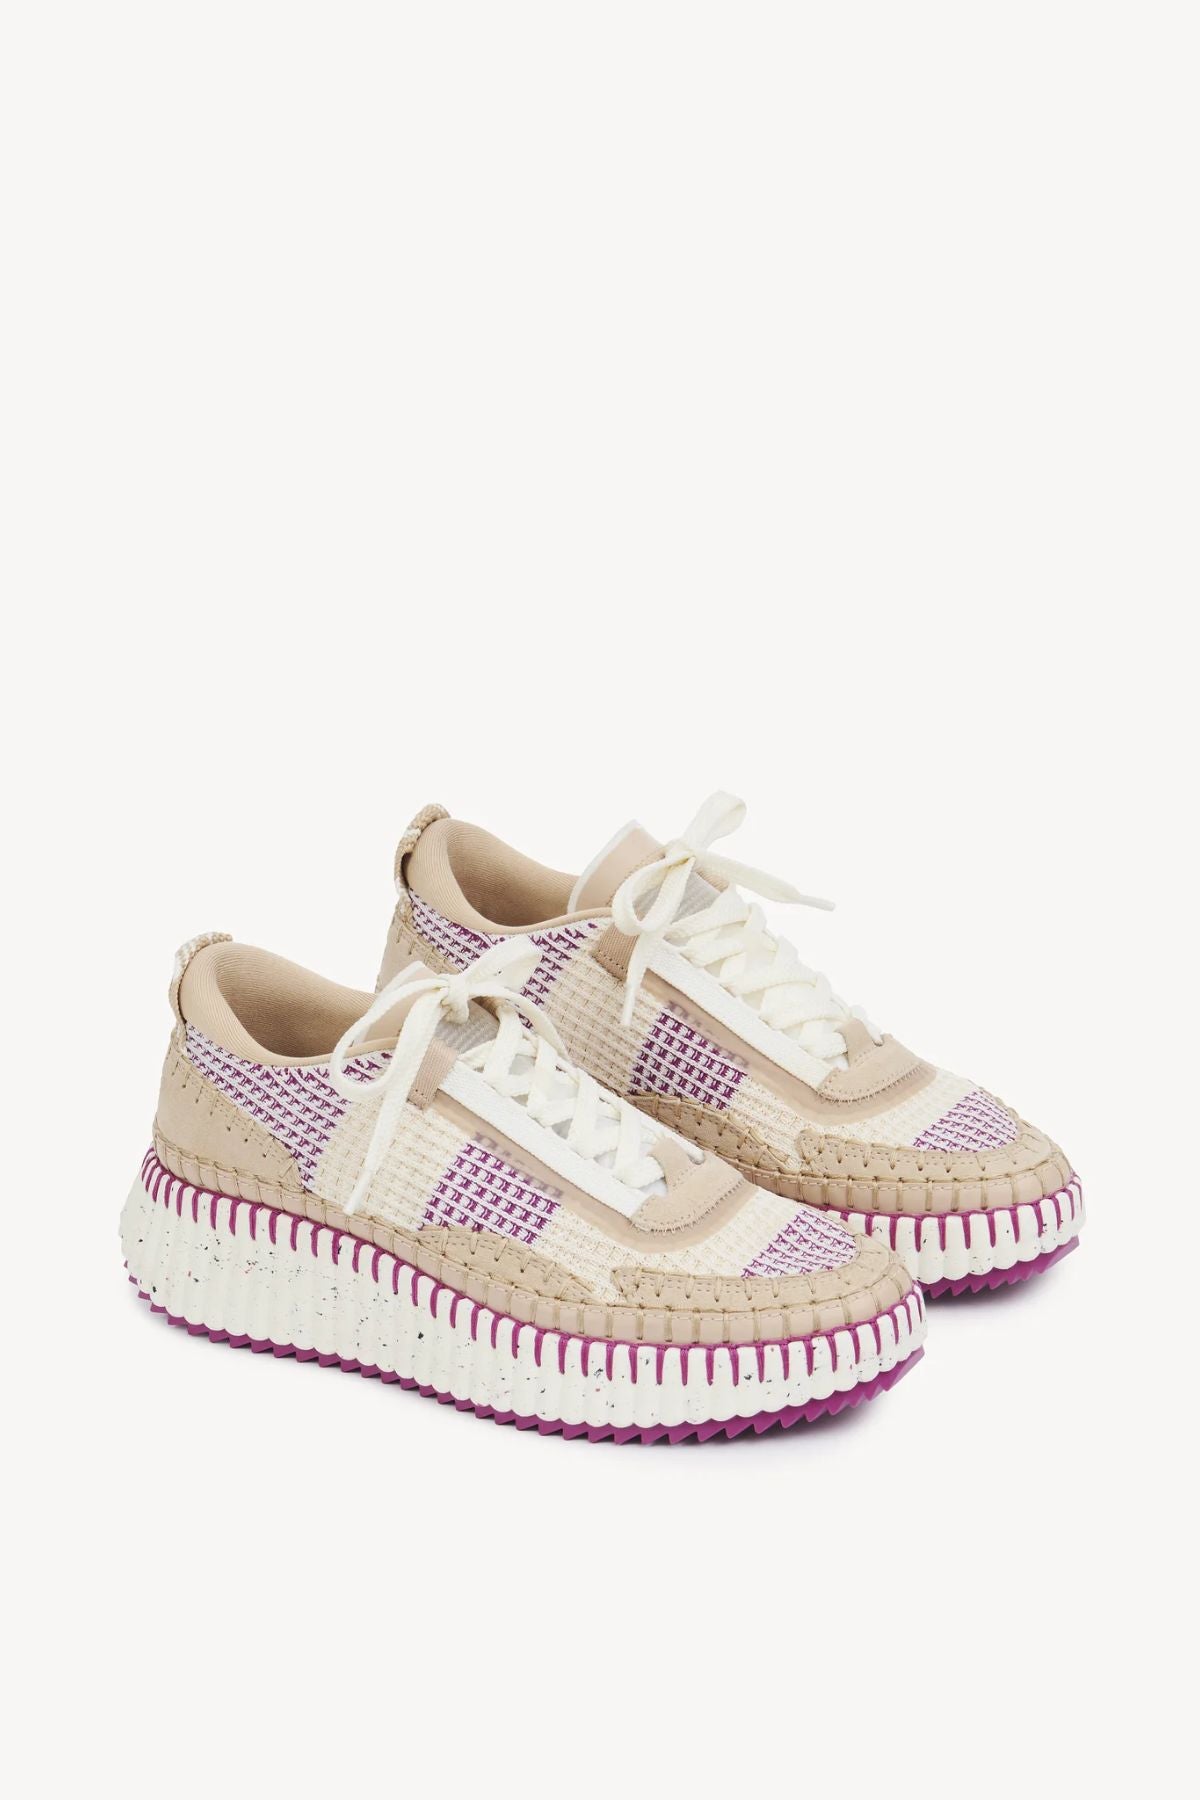 Chloé Nama Sneaker - Wild Purple